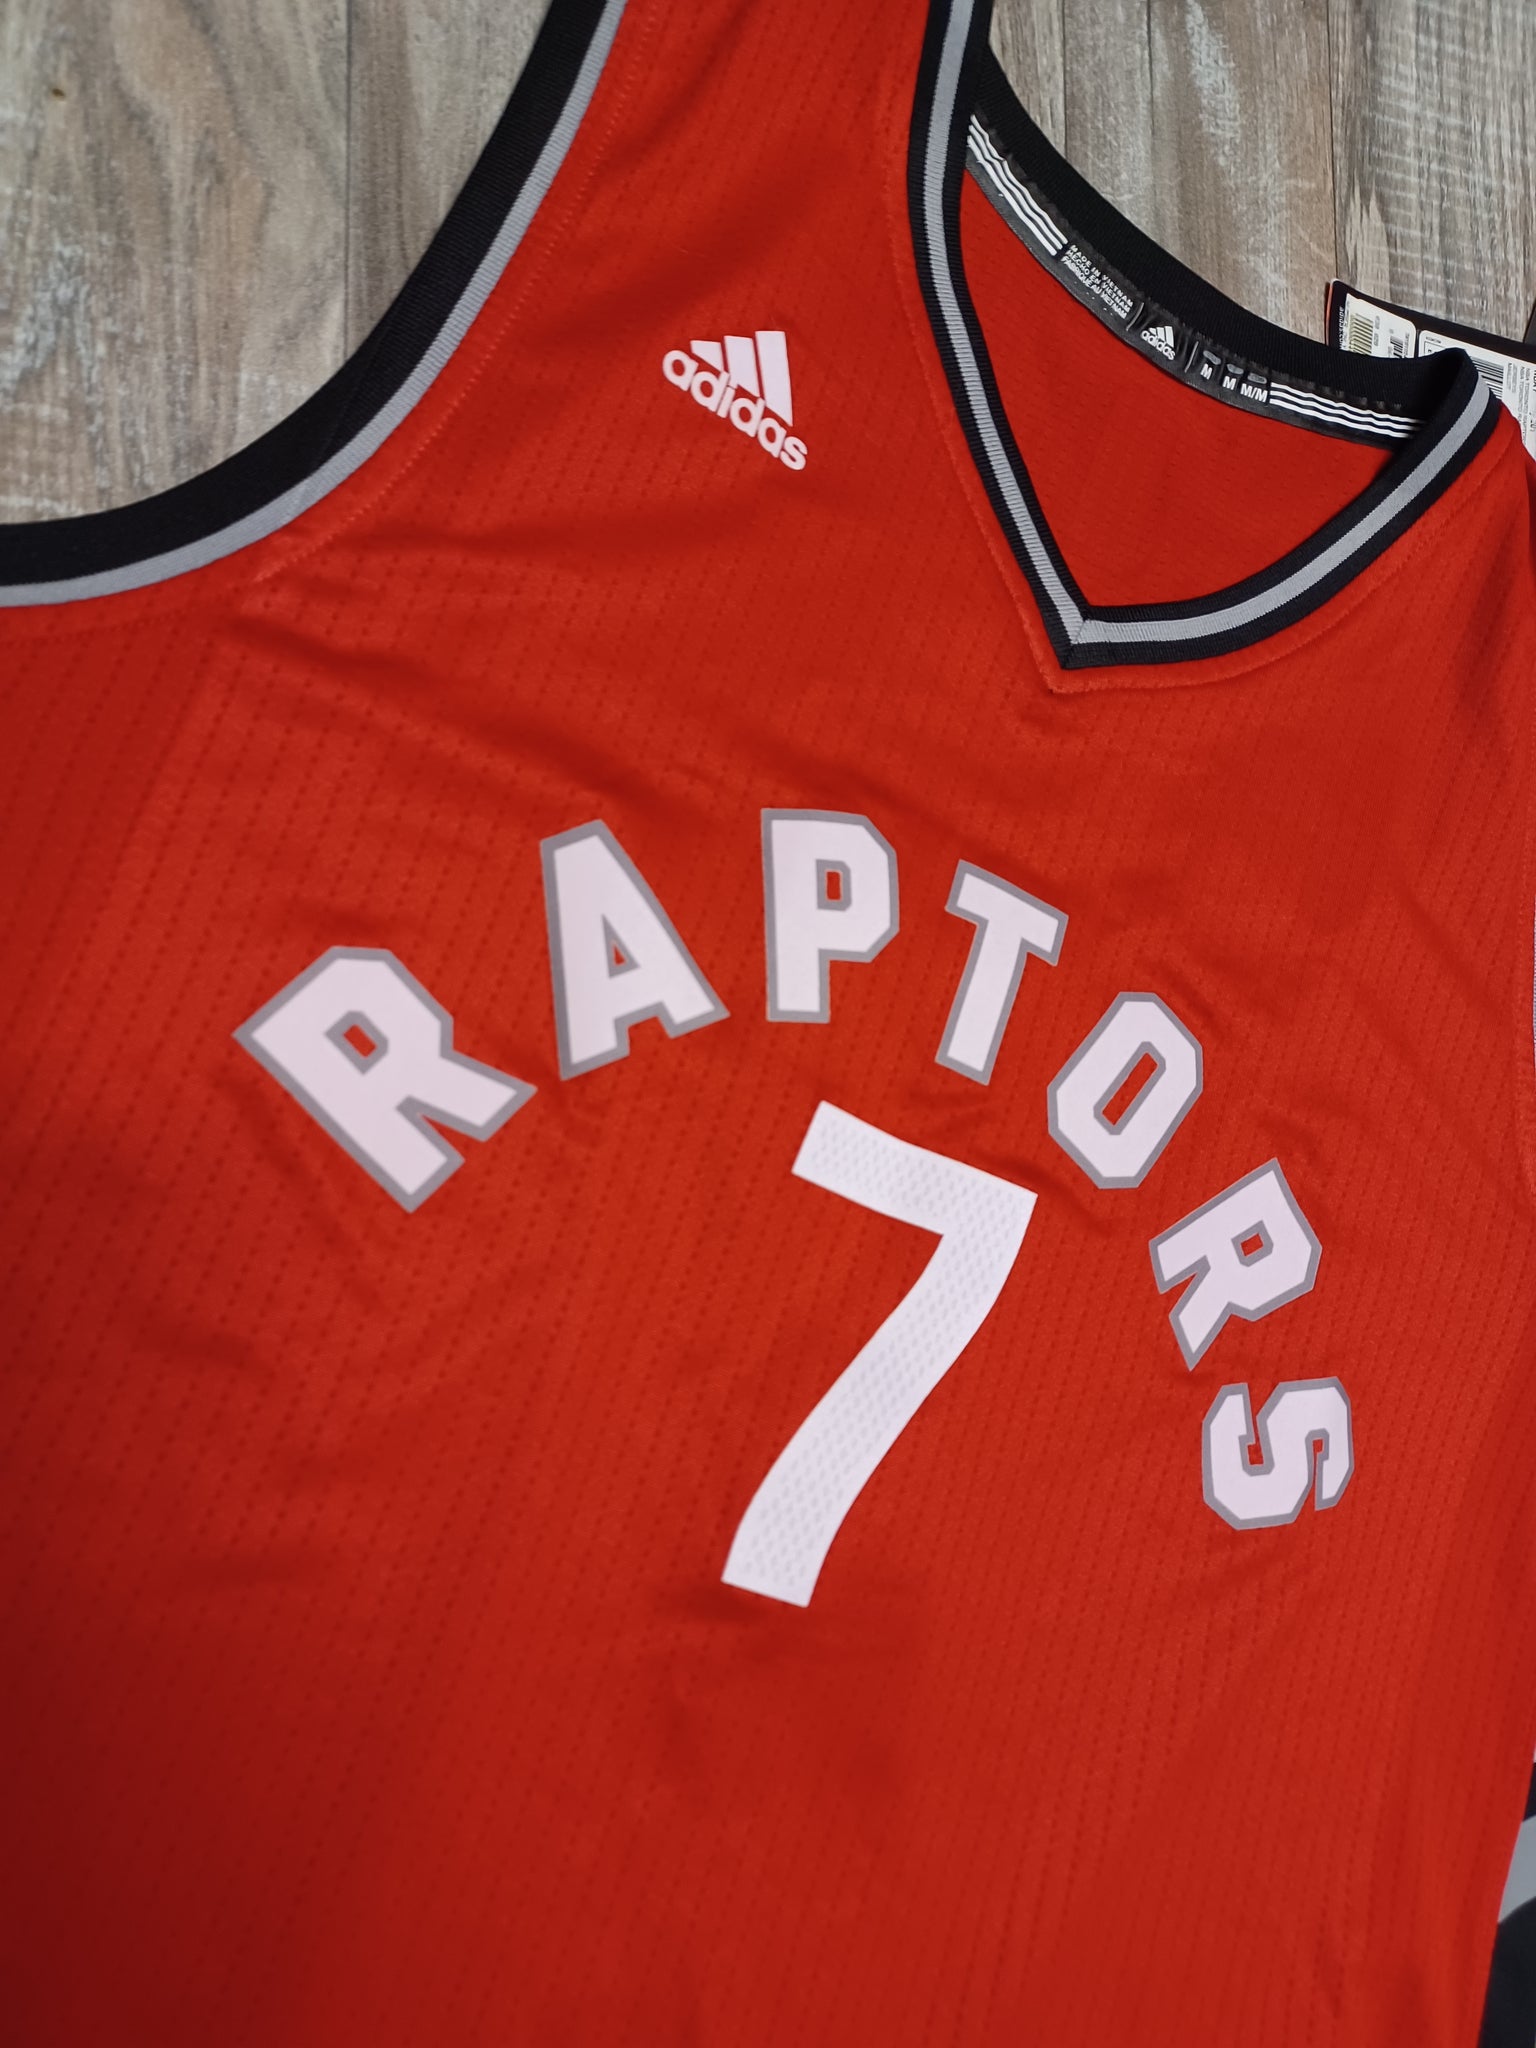 We The North - Toronto Raptors adidas T-shirt - classic dinosaur